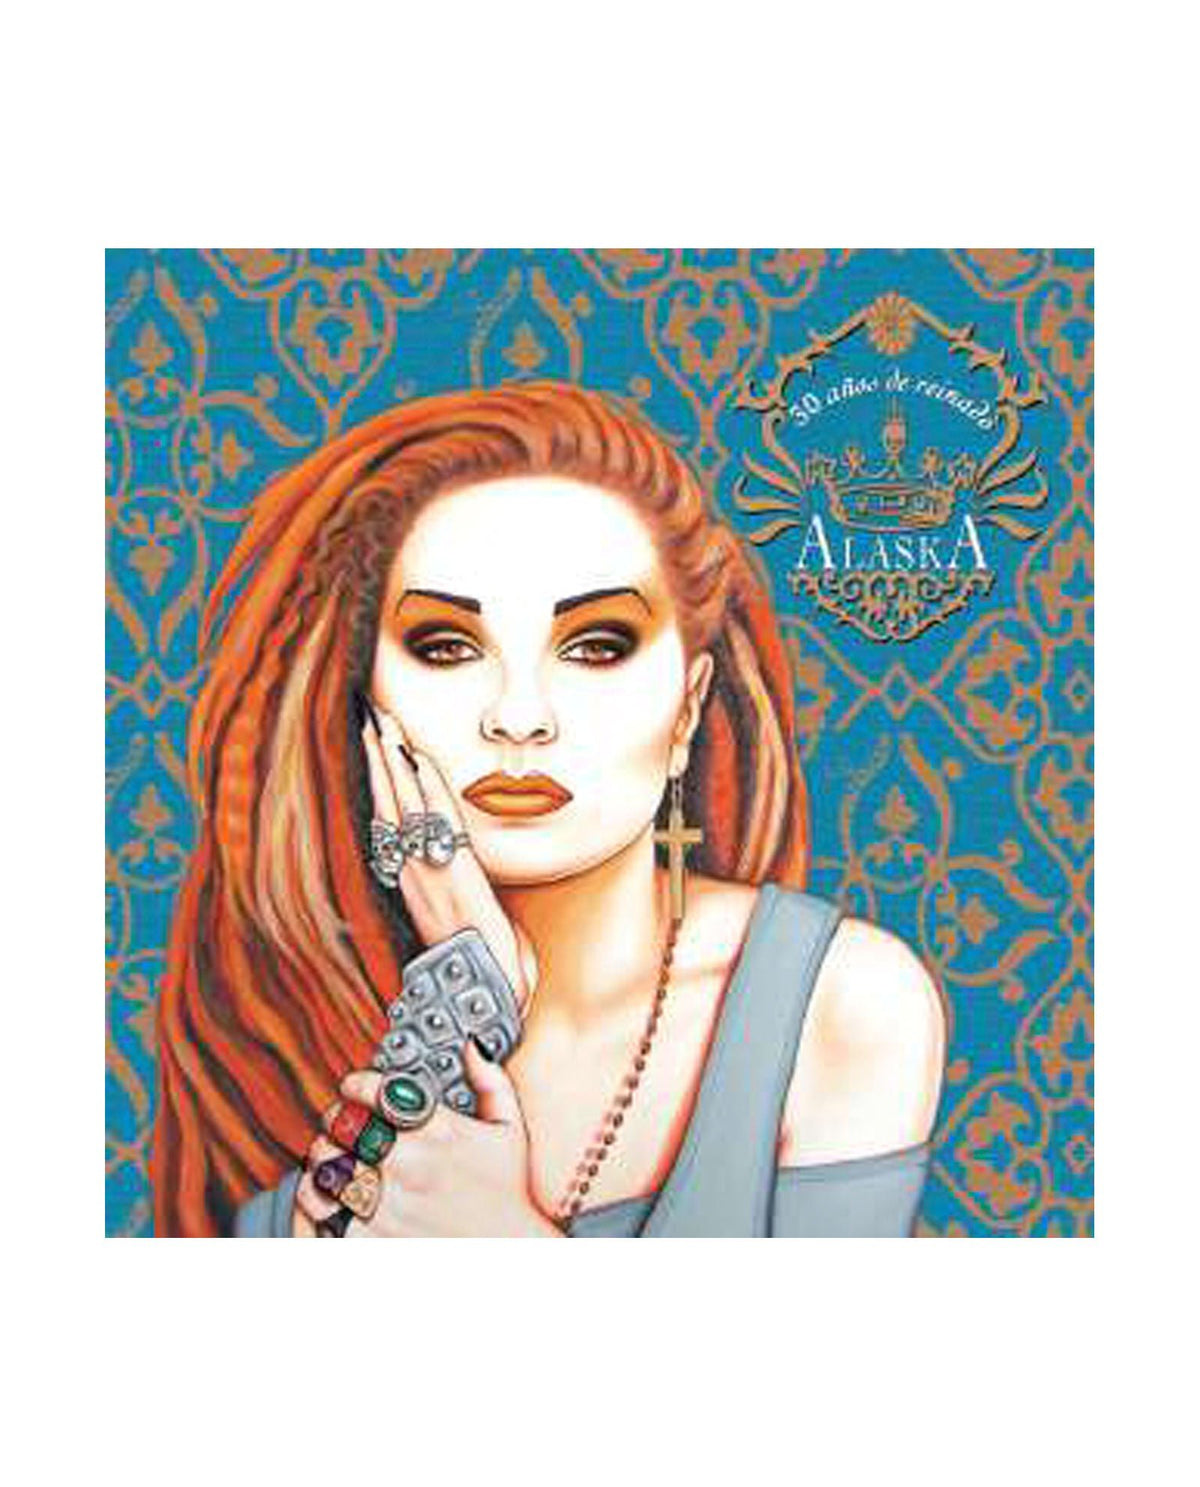 Alaska - LP Vinilo + CD "30 años de reinado" - D2fy · Rocktud - D2fy